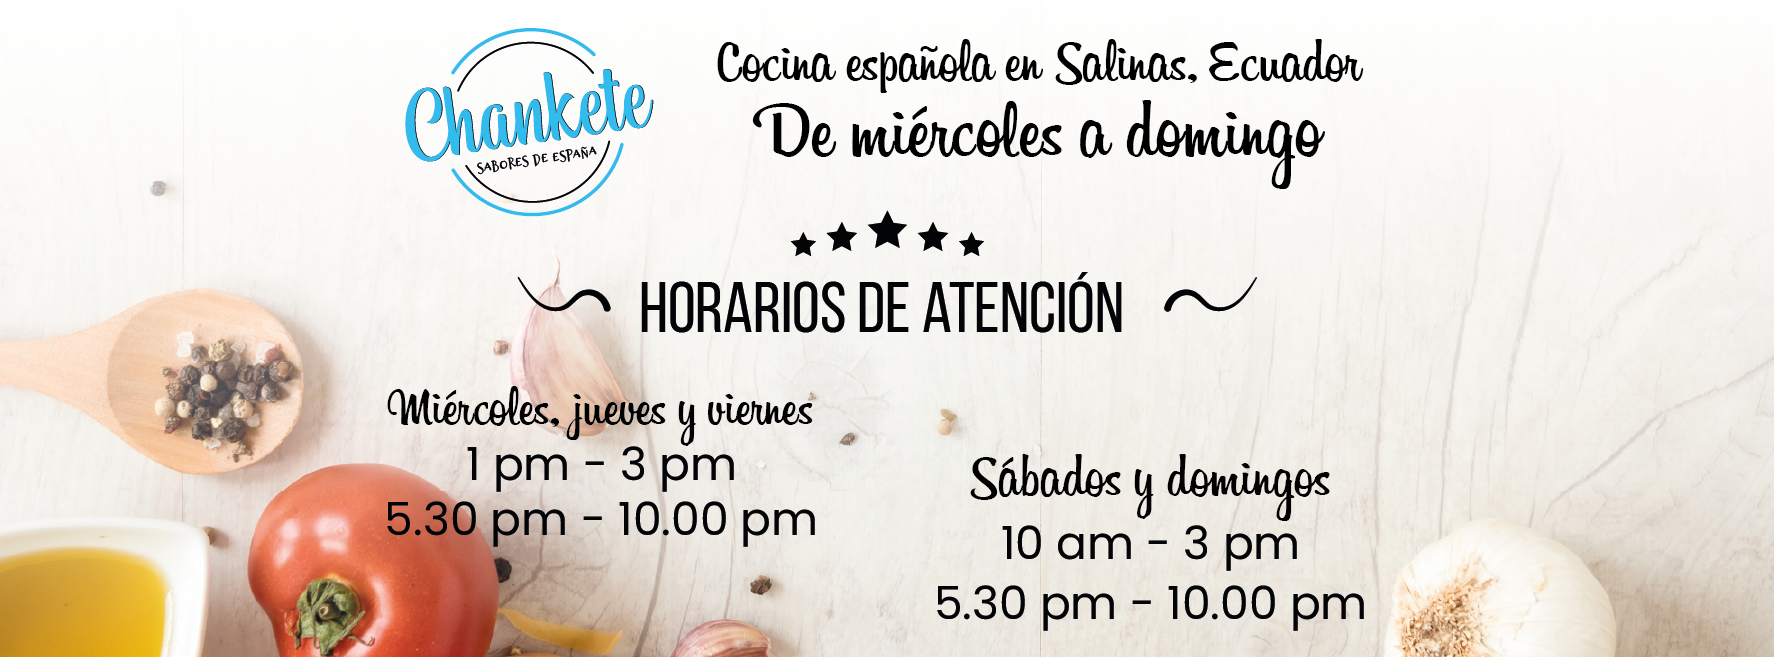 Nuevos horarios · Restaurante Chankete · Salinas, Ecuador